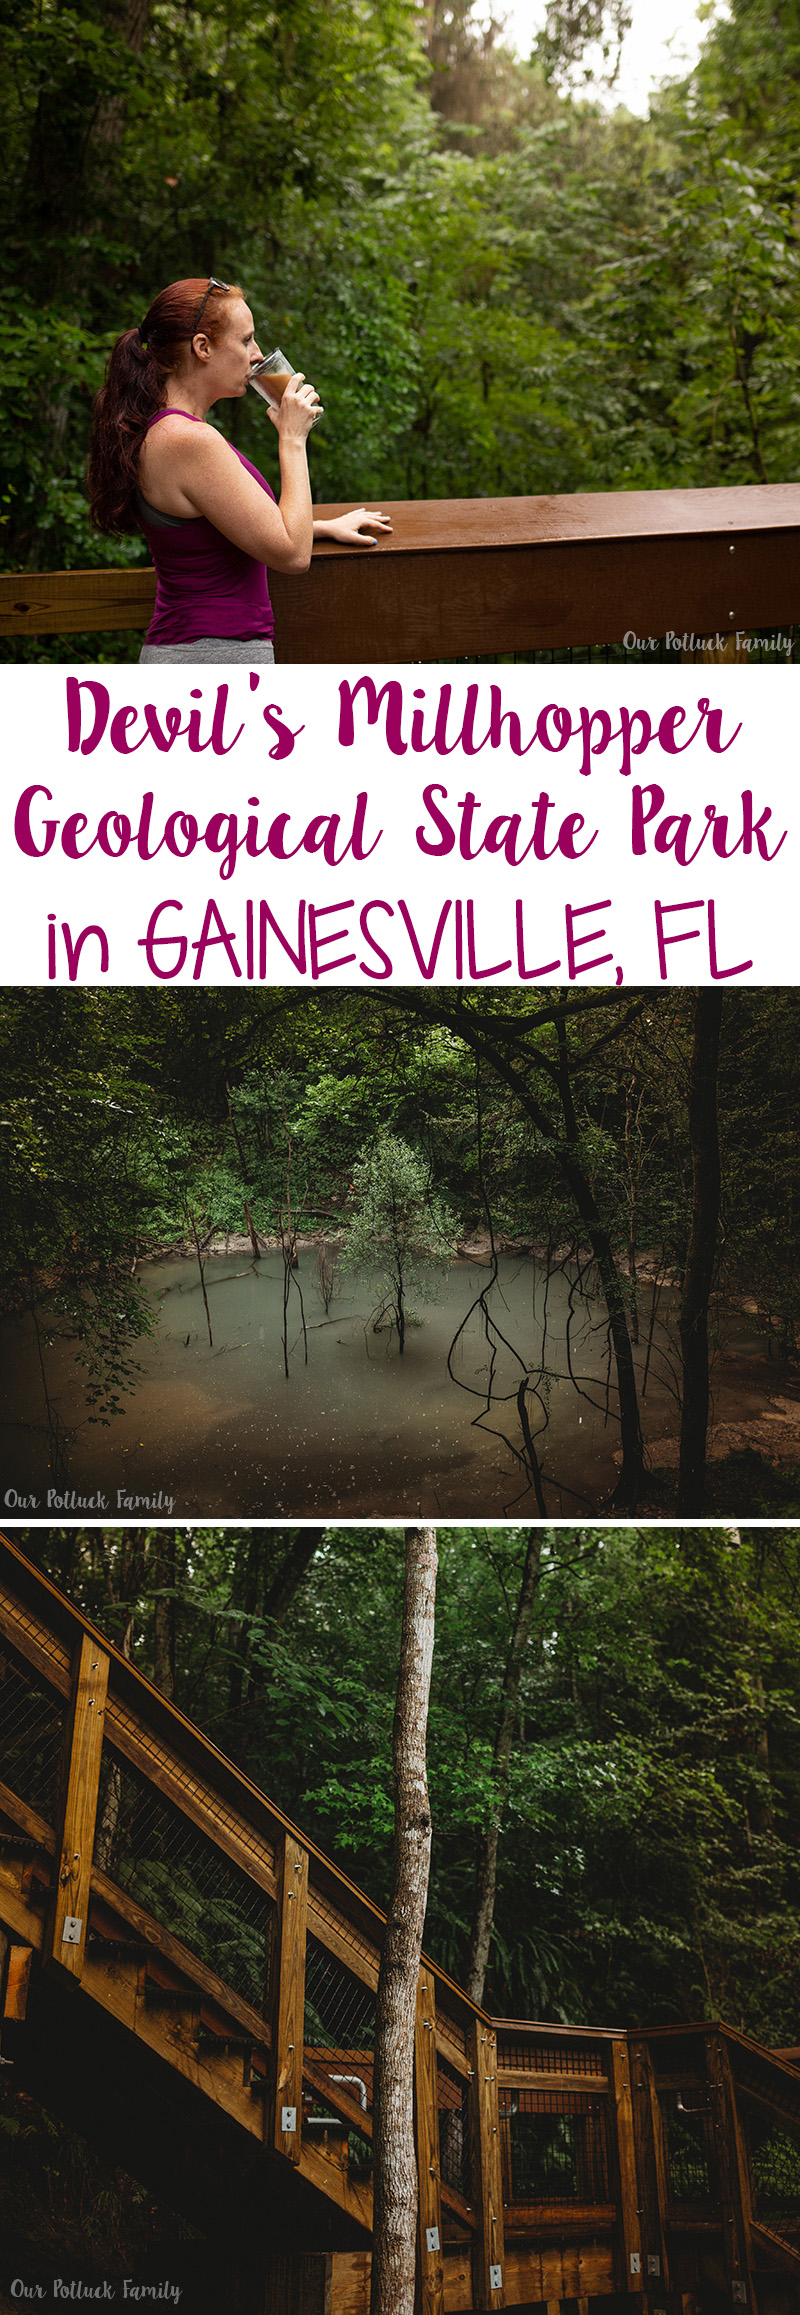 Devil's Millhopper Geological State Park in Gainesville, FL